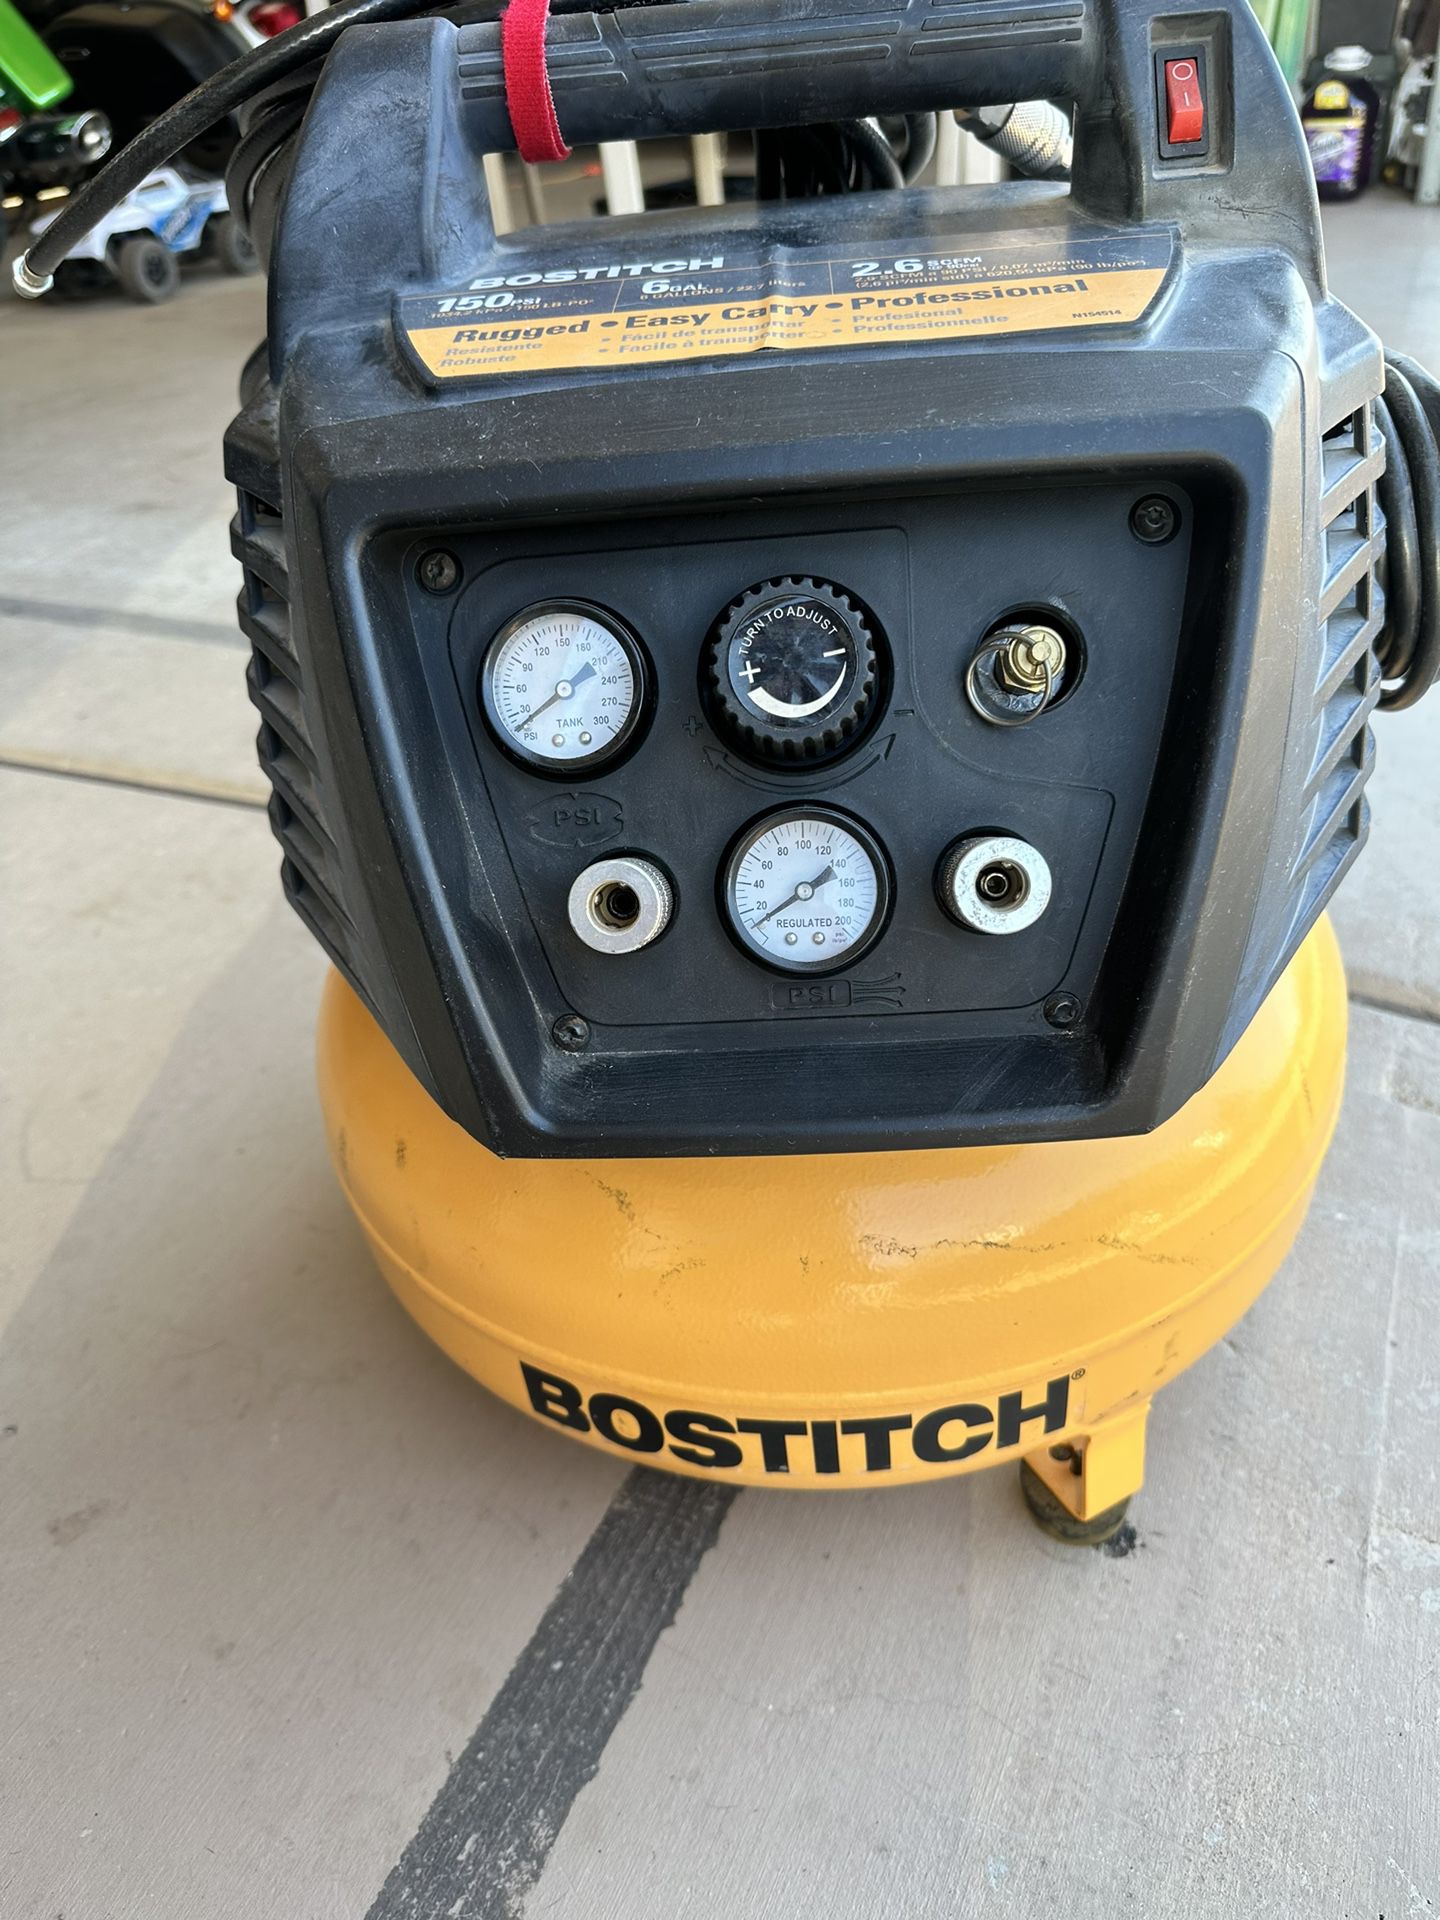 Bostitch Air Compressor And Tools